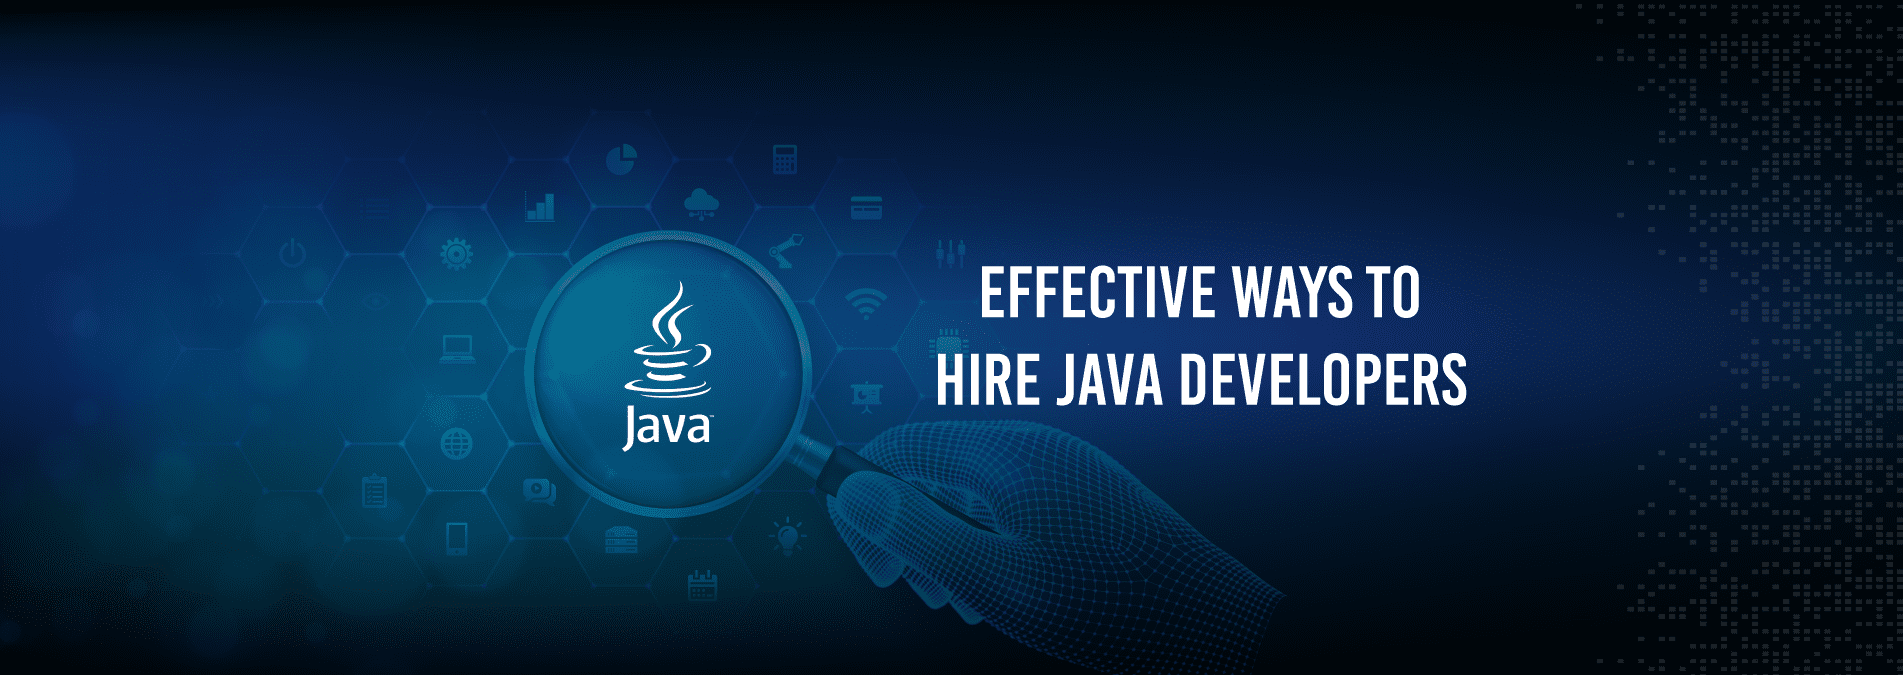 Effective ways to hire java developers - Internet Soft